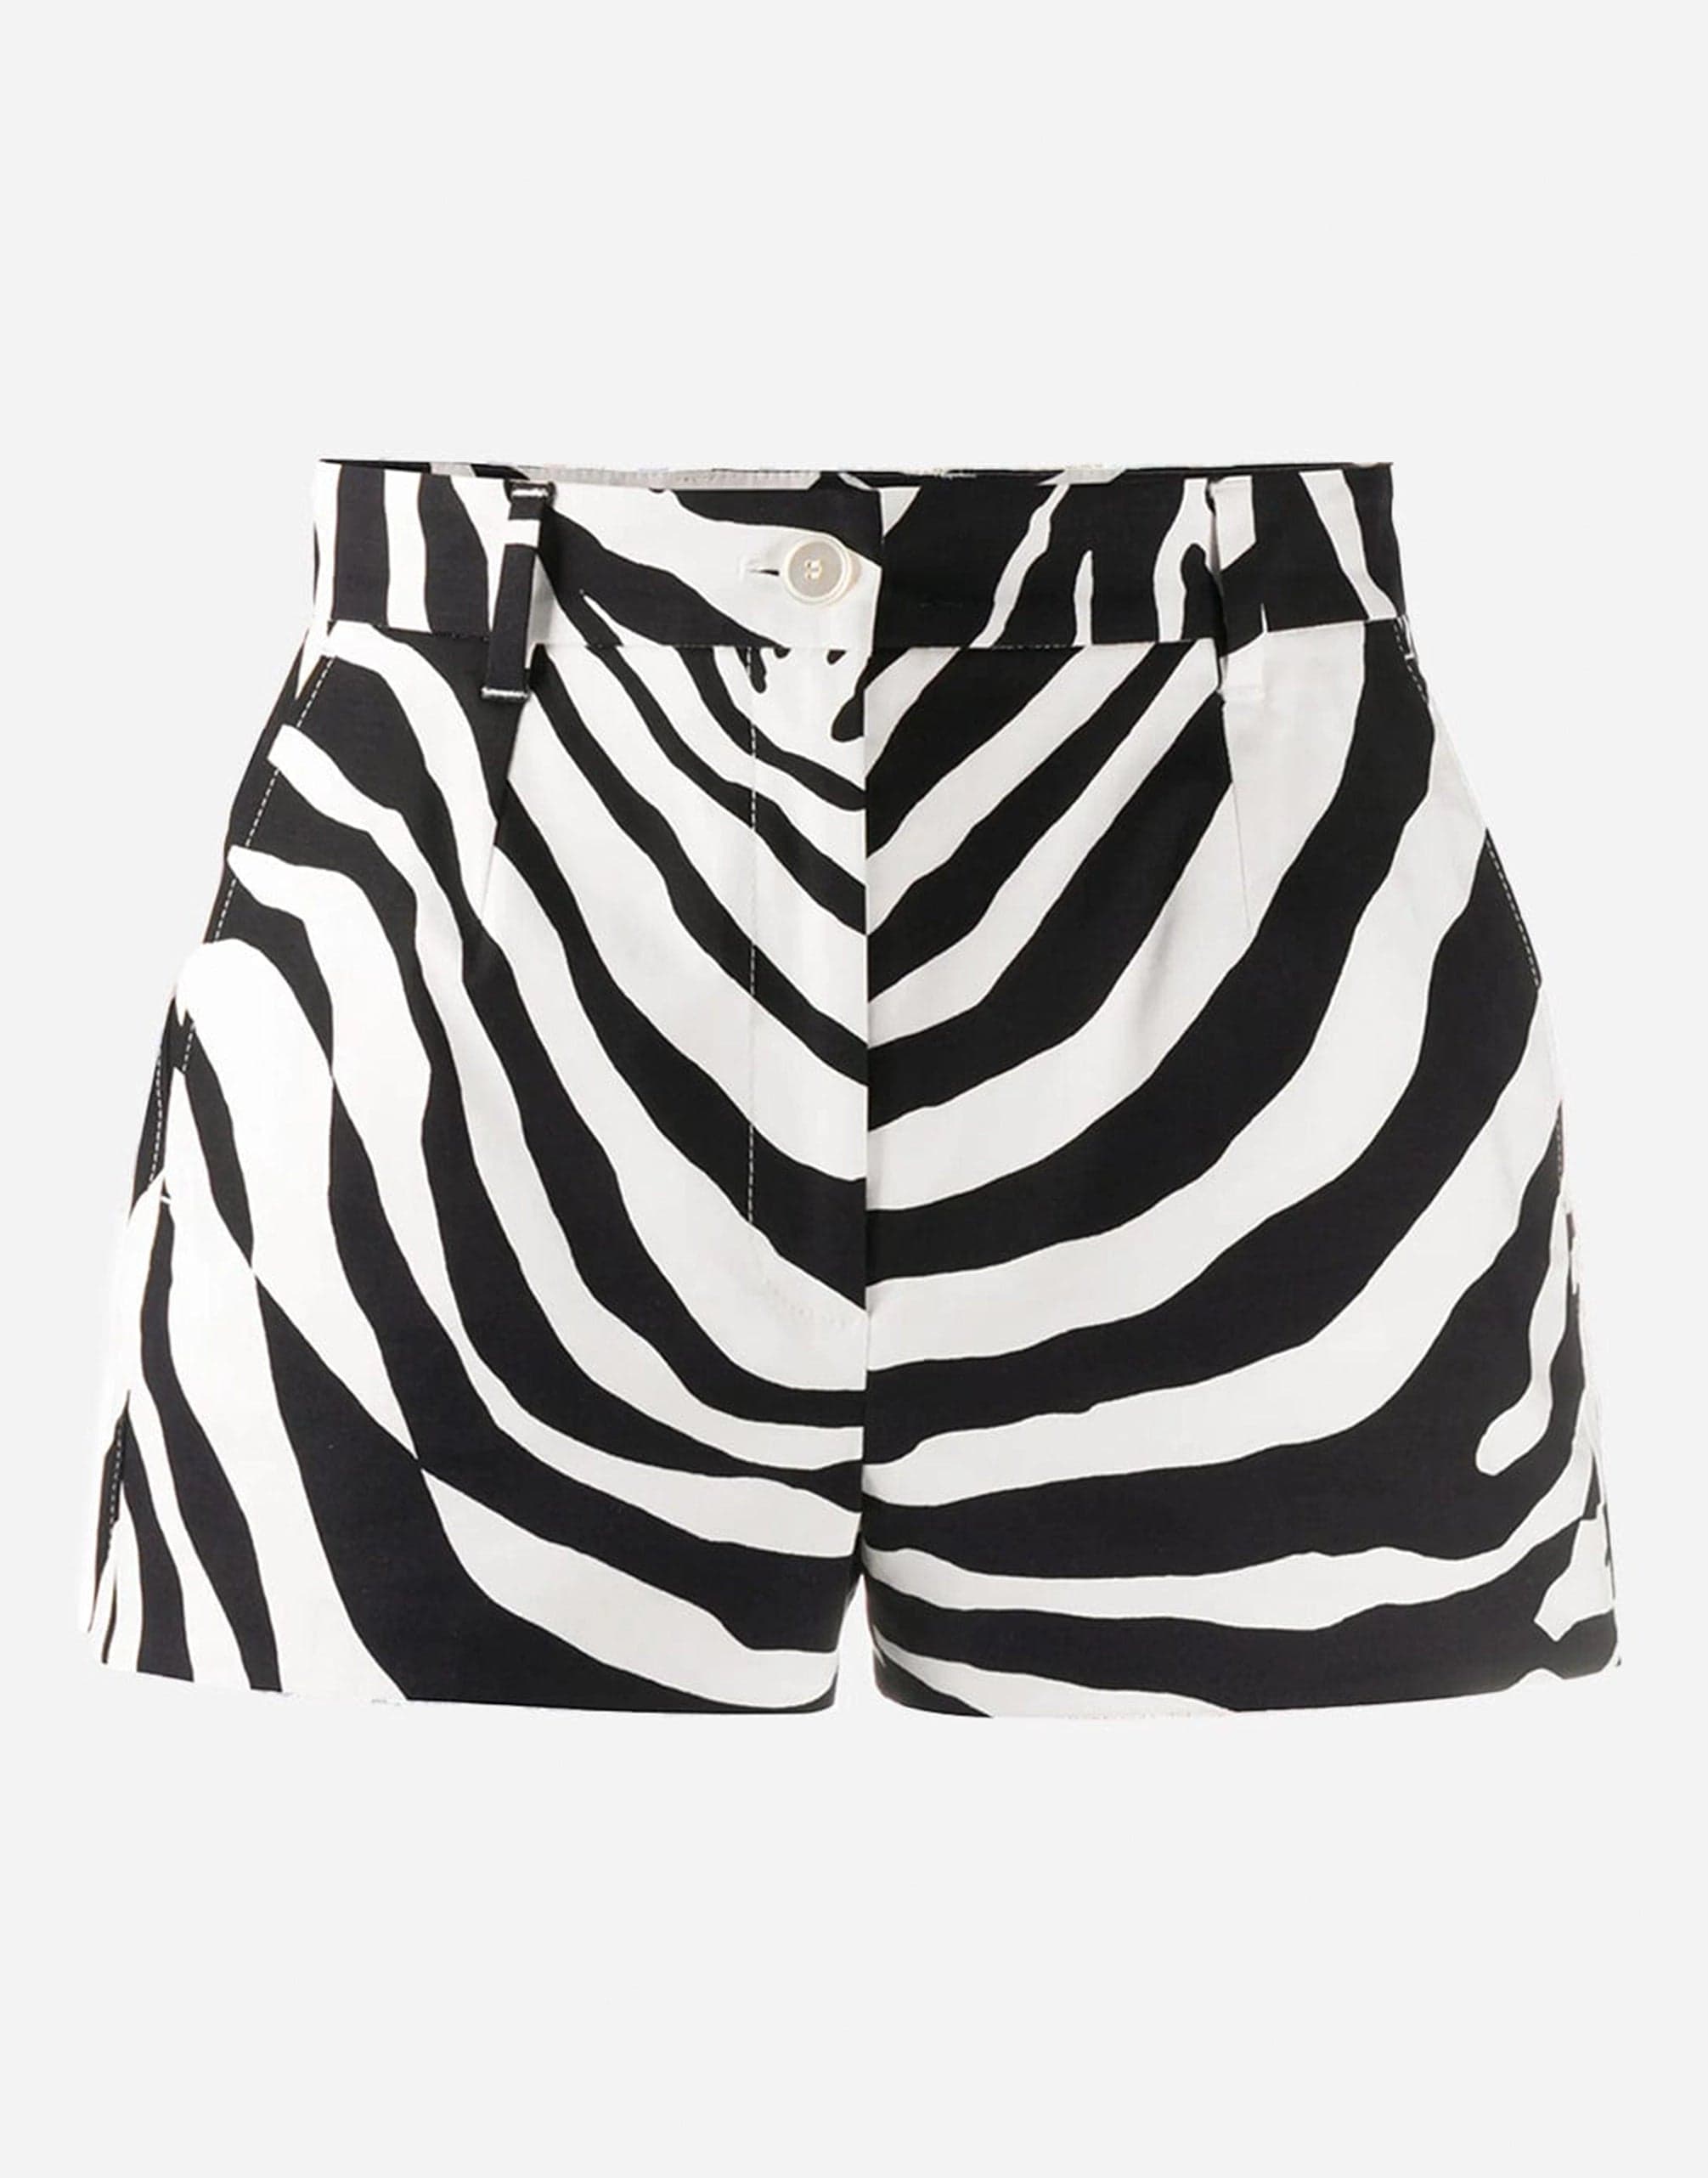 Dolce & Gabbana Zebra Print Shorts